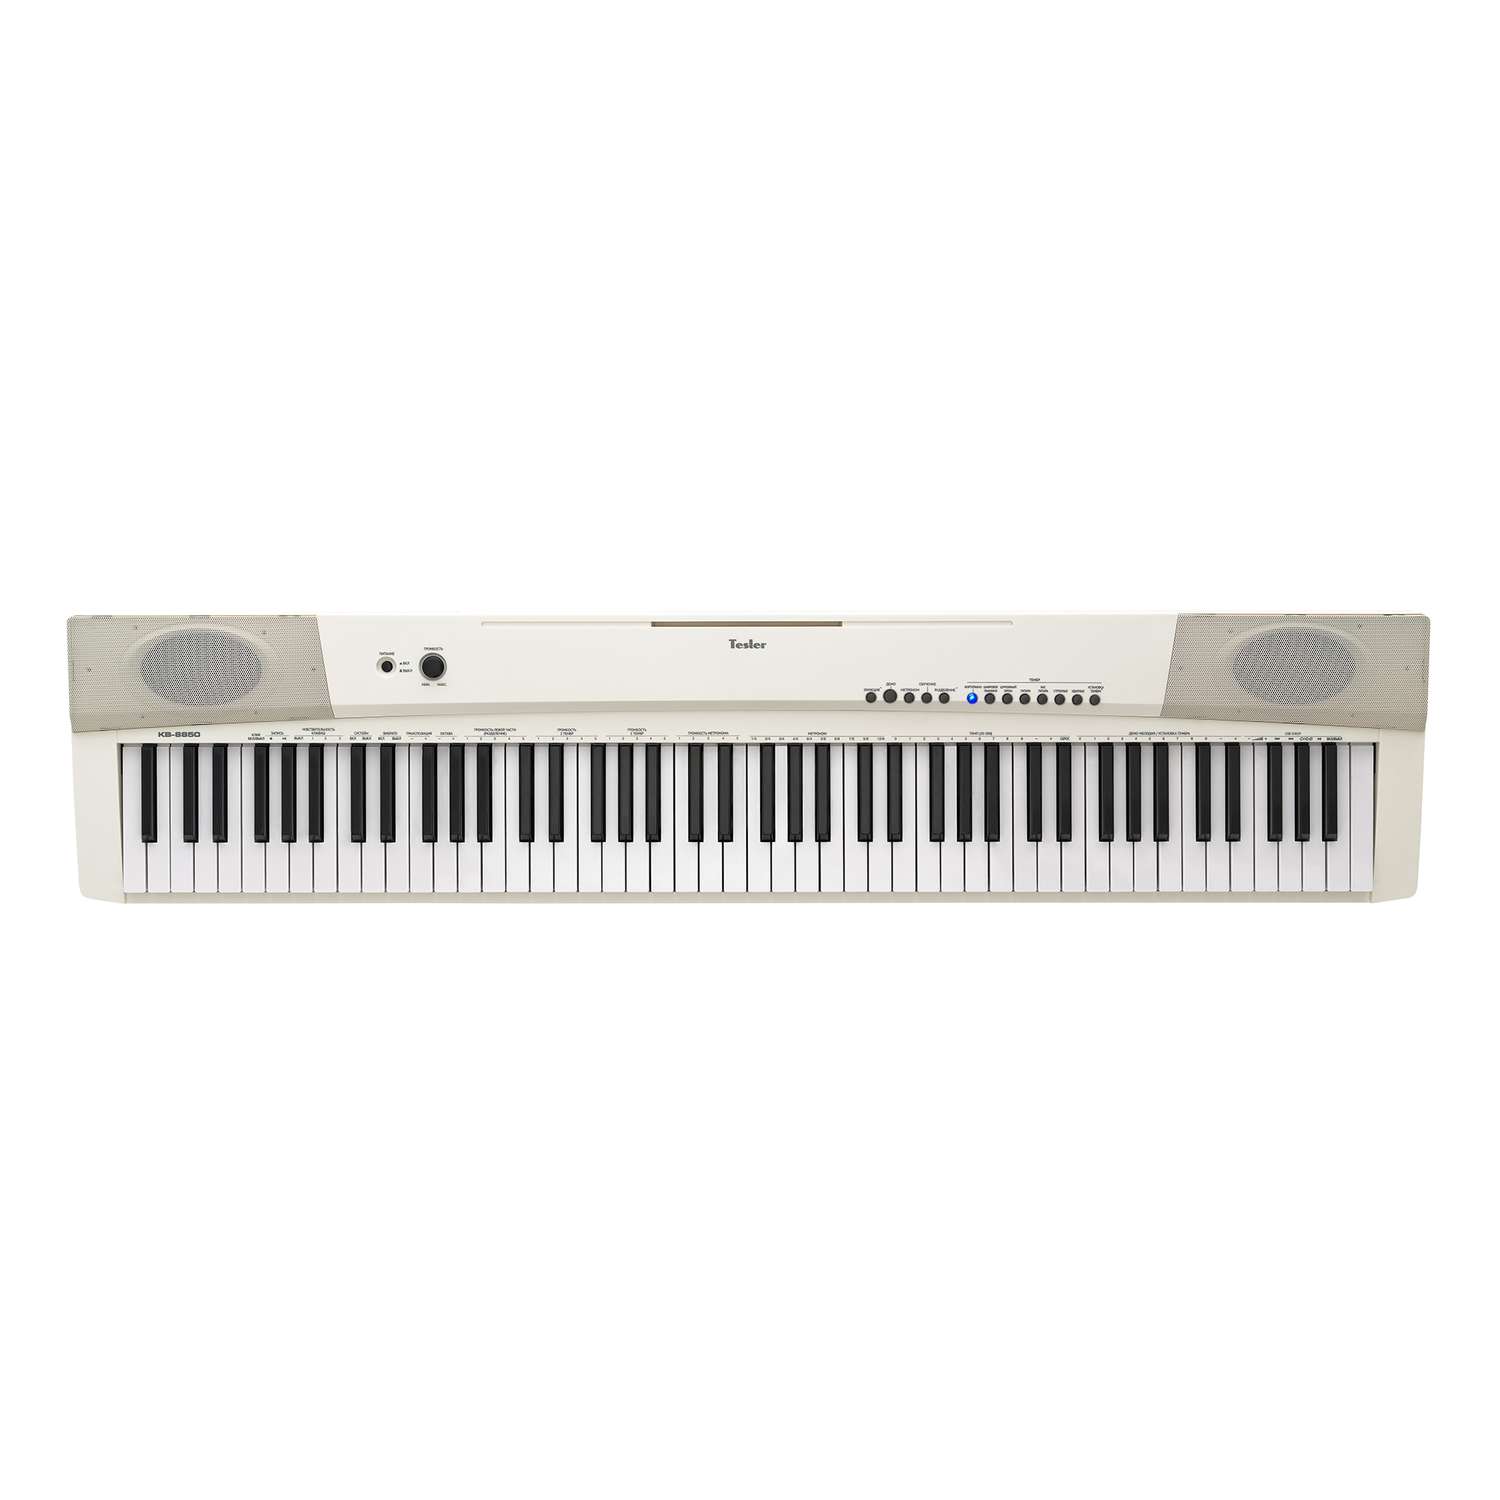 Цифровое пианино Tesler KB-8850 White - фото 4